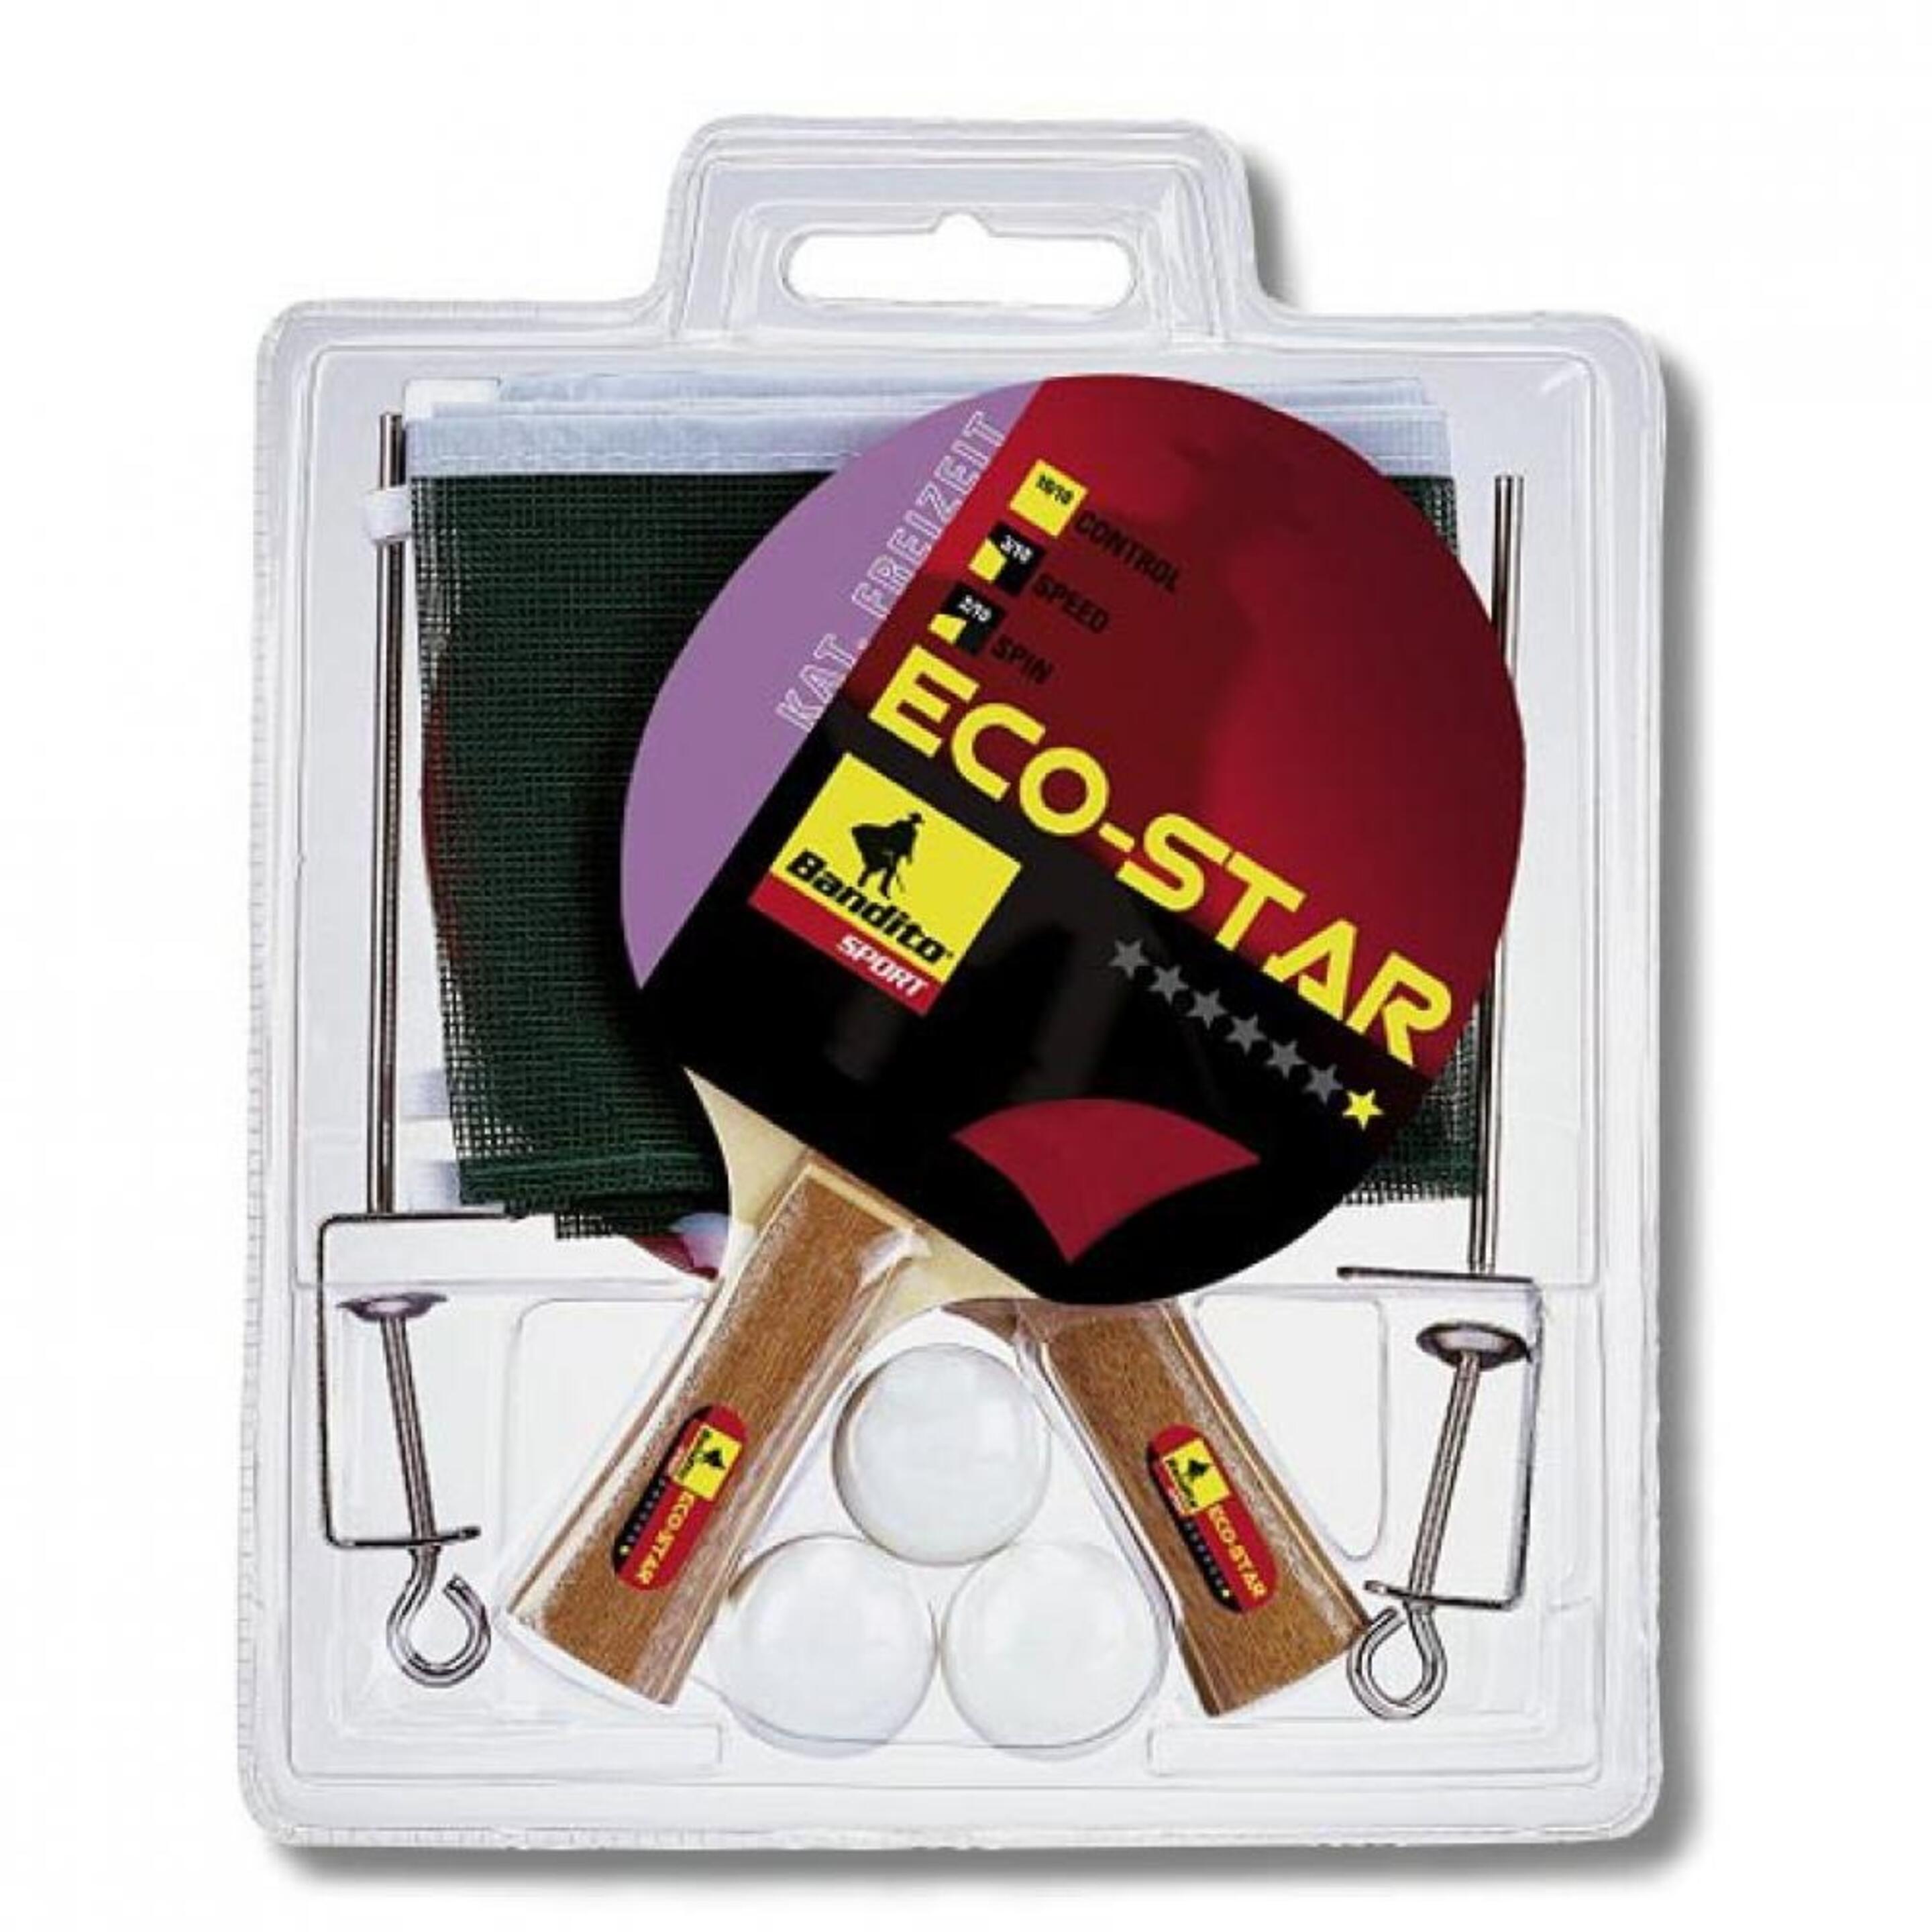 Pacote 2 Ping Pong Pong + 3 Bolas + Rede De Bandito Eco-star 4110.01 - Preto | Sport Zone MKP